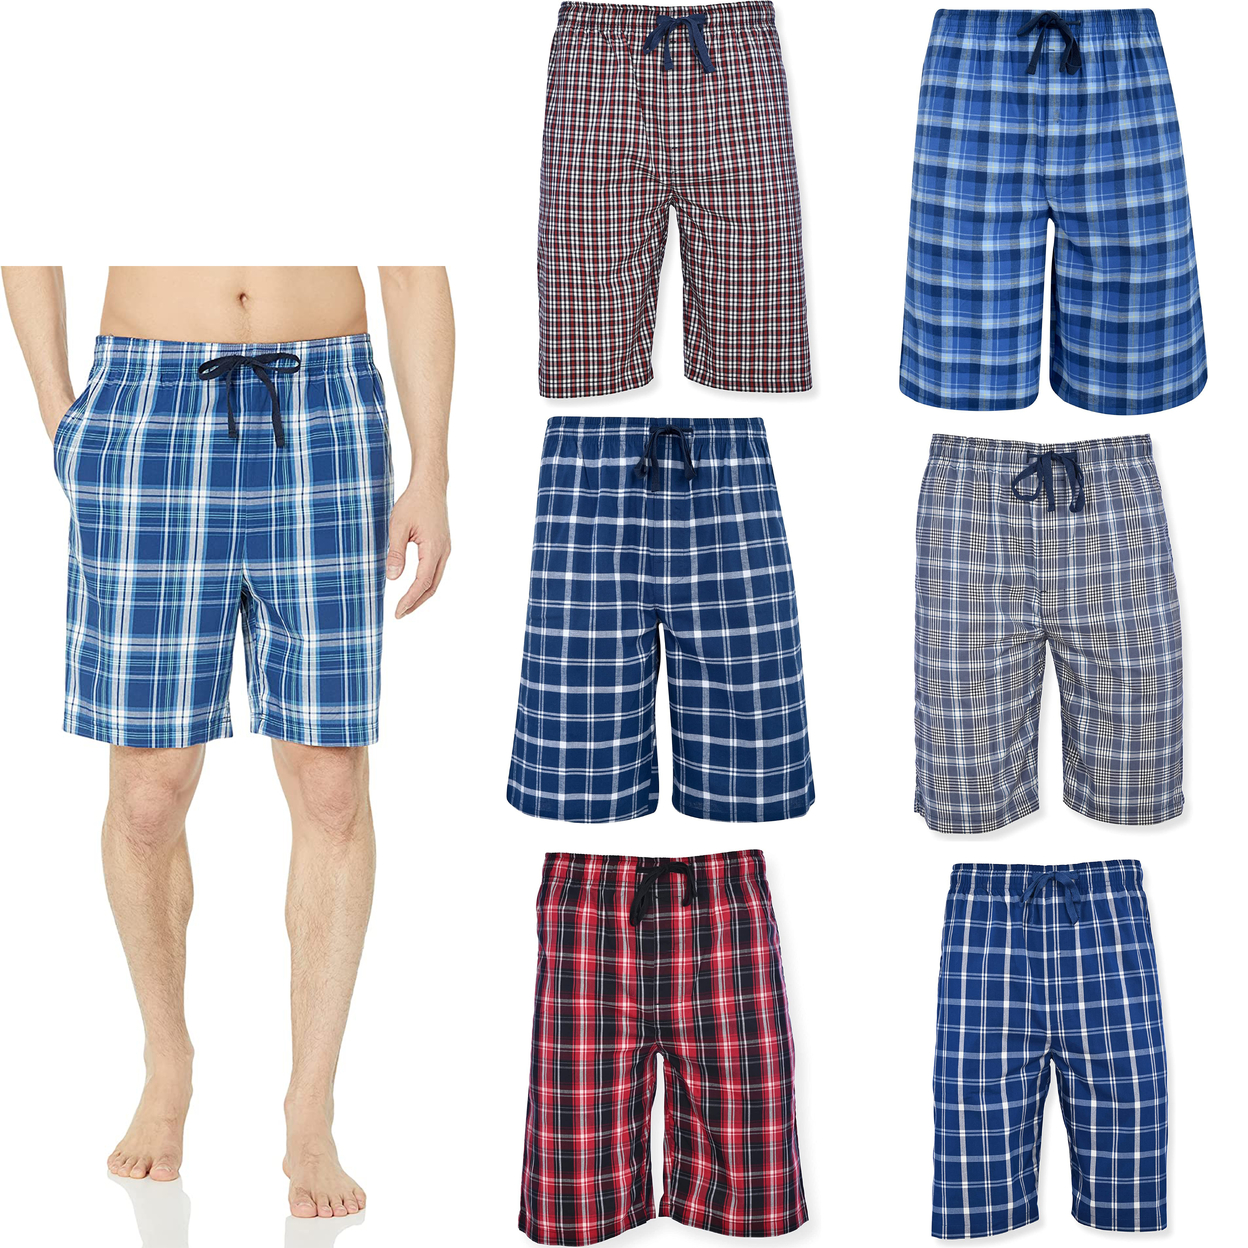 2-Pack: Men's Ultra Soft Plaid Lounge Pajama Sleep Wear Shorts - Red & Blue, X-large